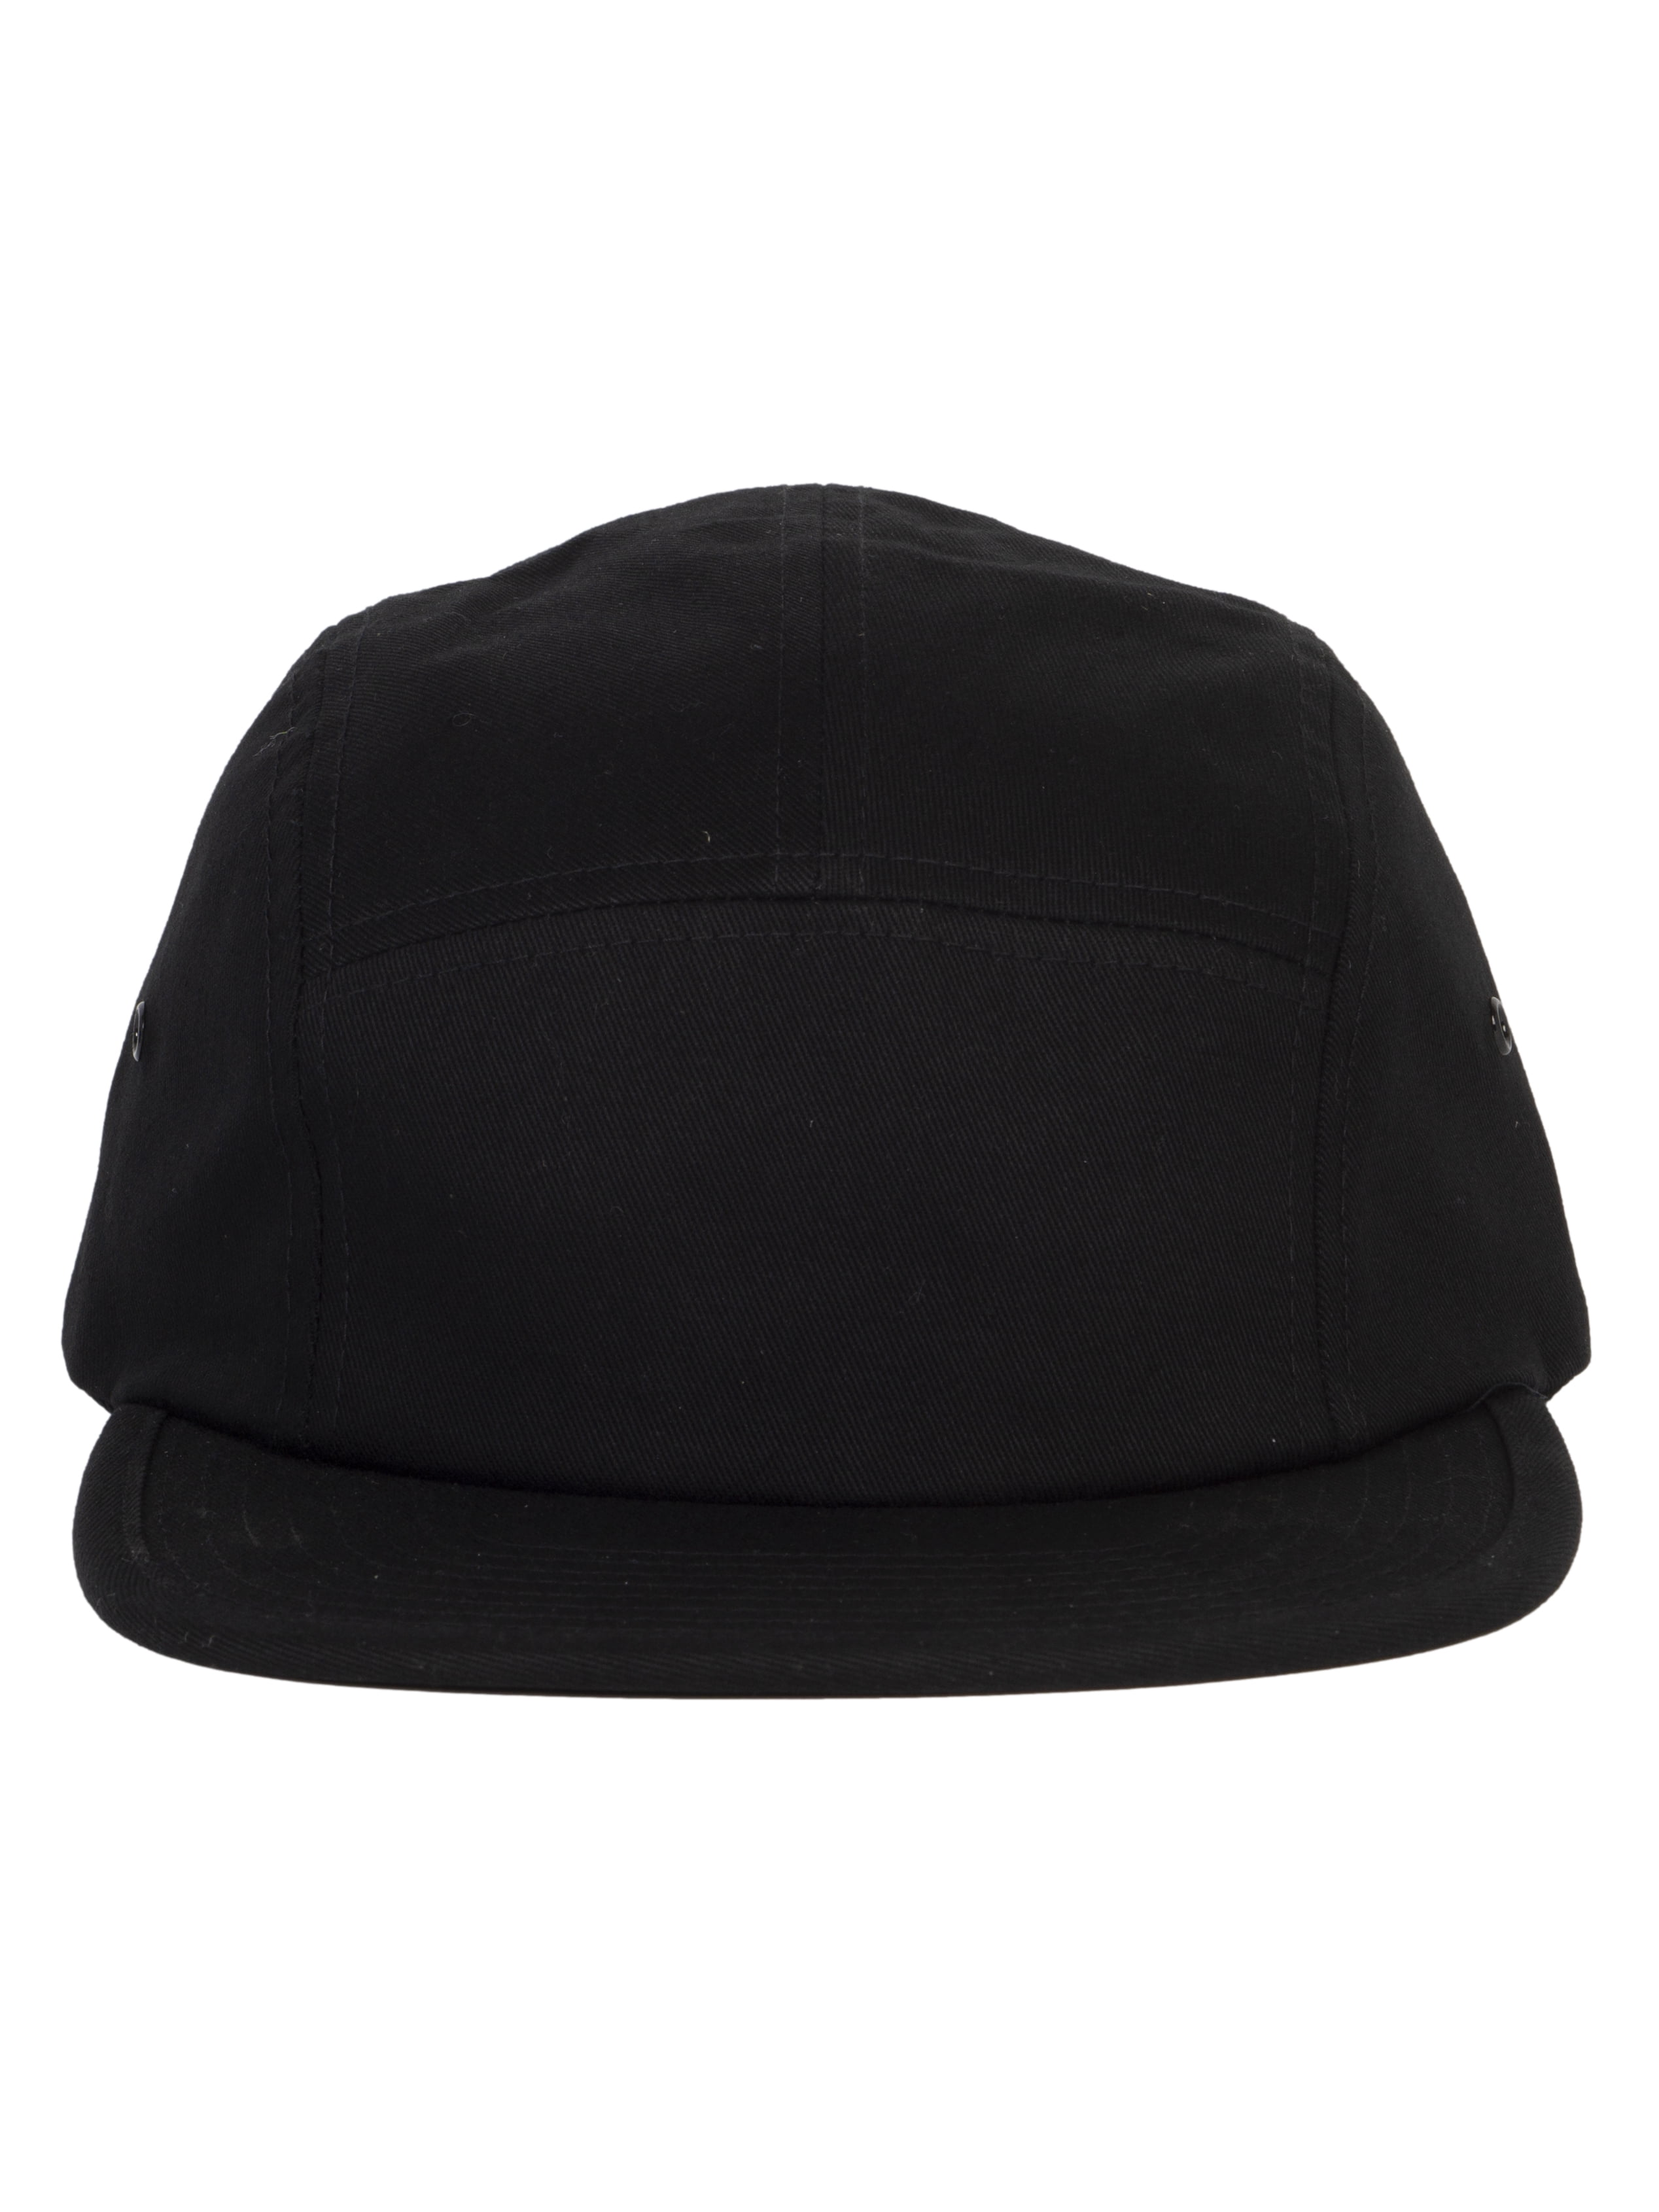 For Baseball Black Men Top Bill Jockey Classic Flat Cap Panel Hat 5 Headwear